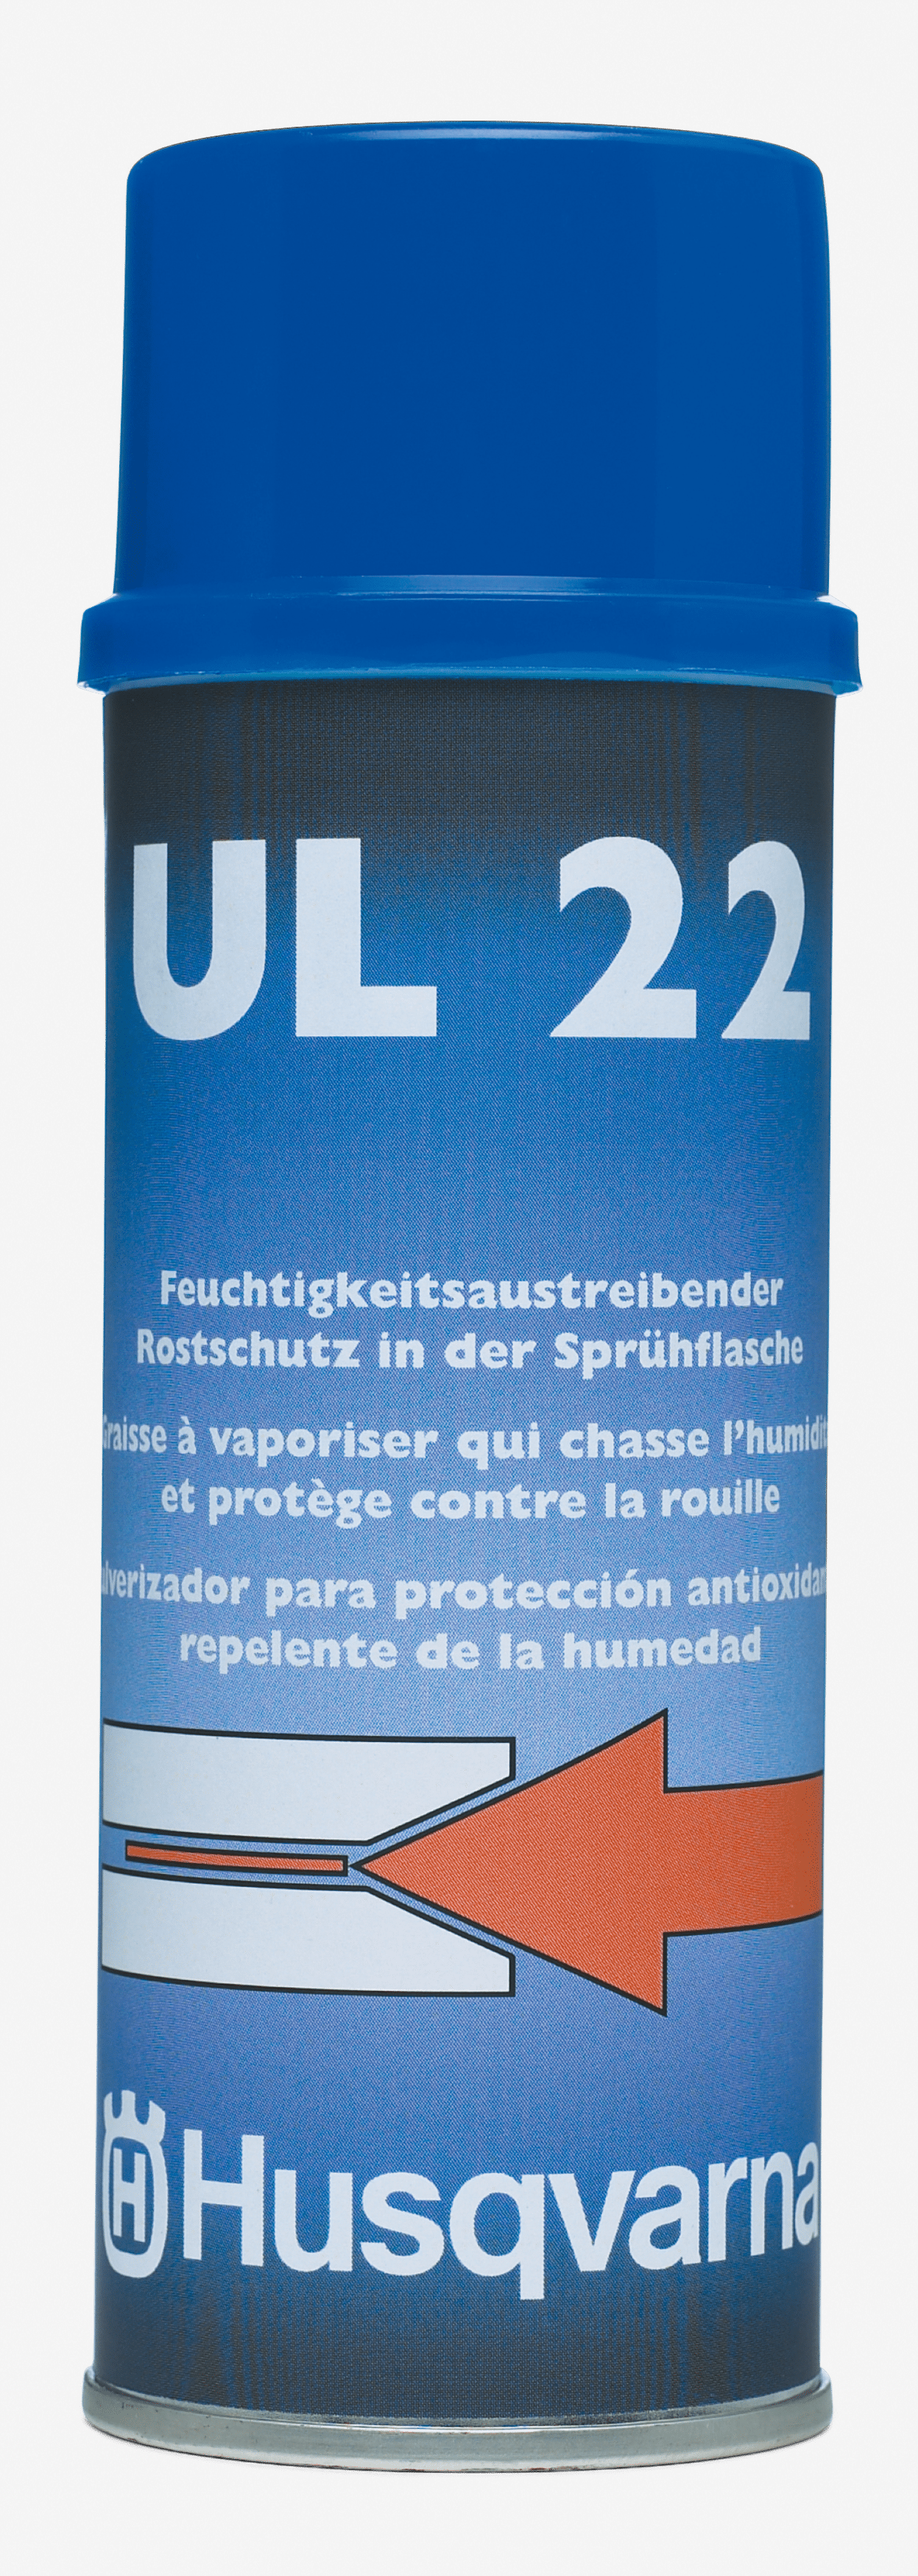 UL 22 grease